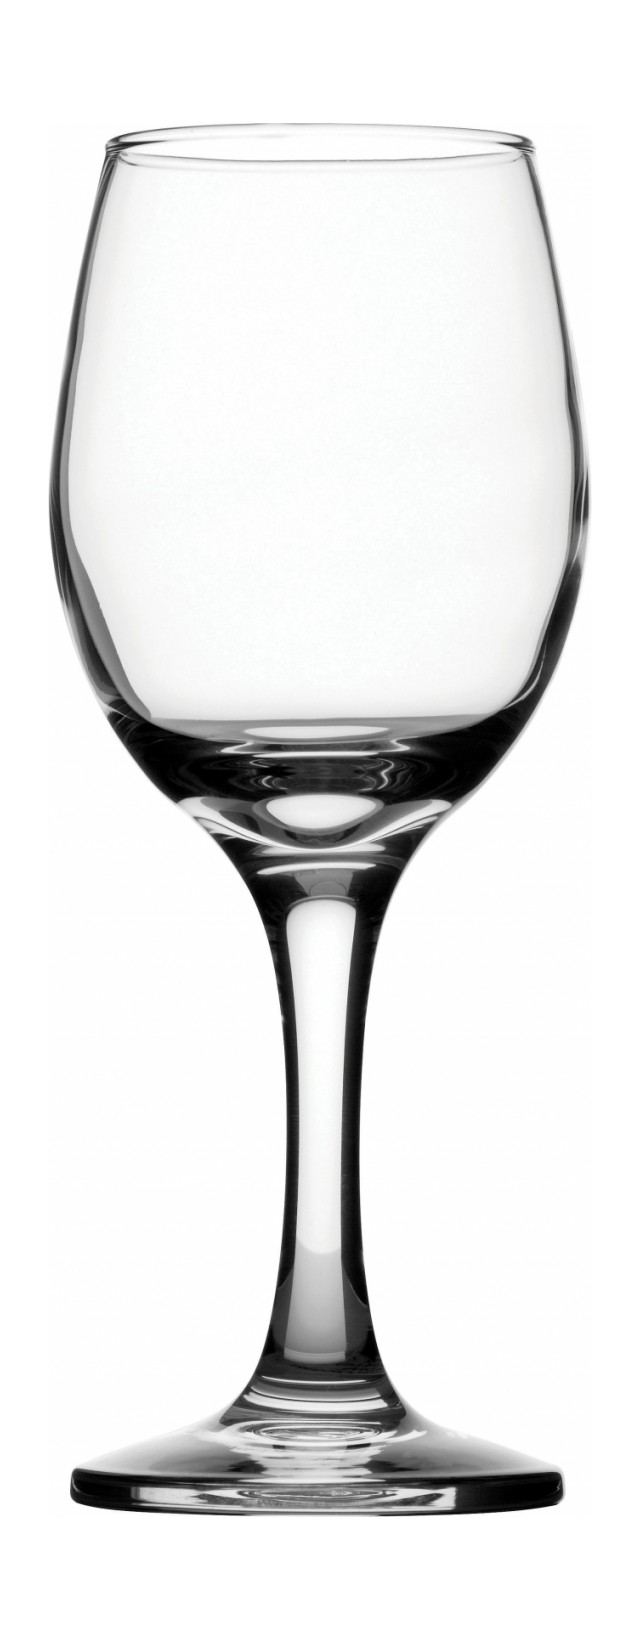 clipart wine glasses - photo #27